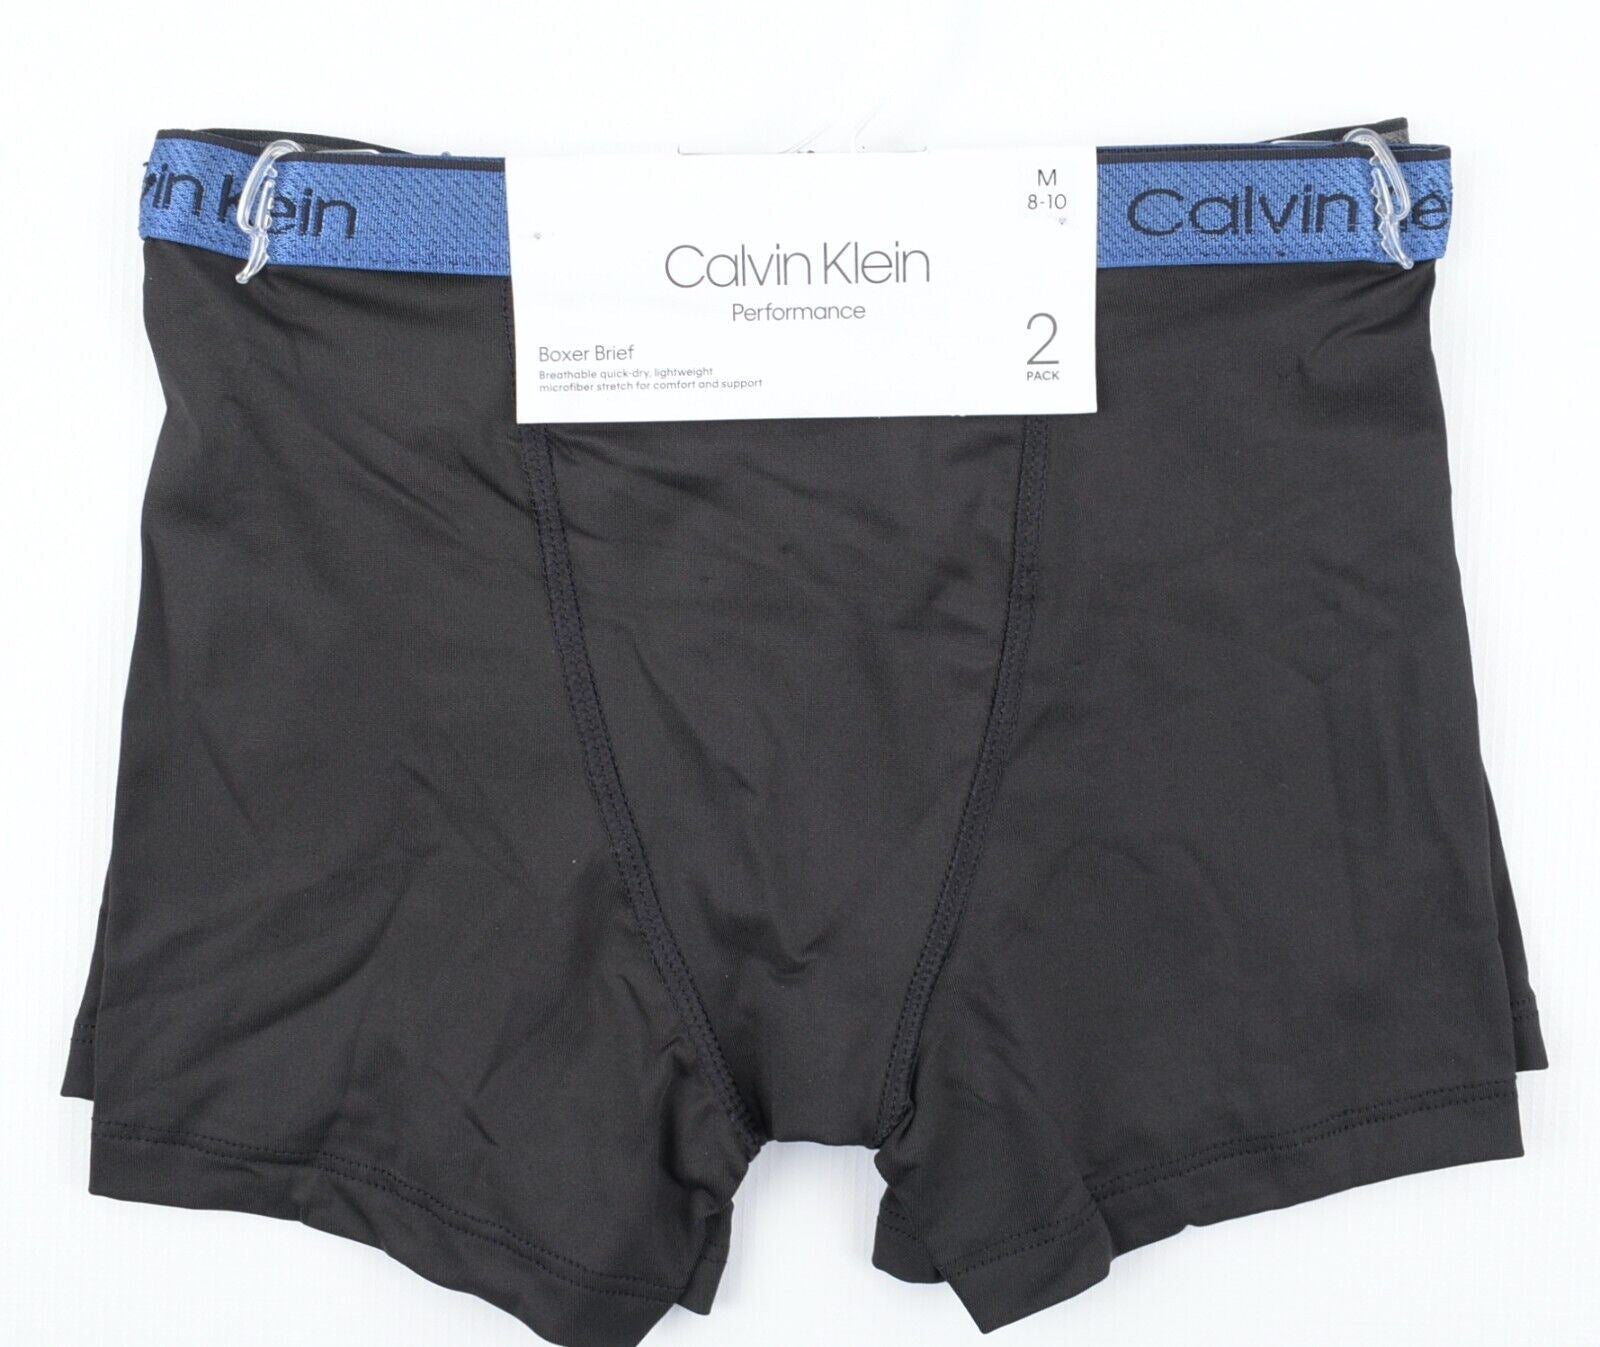 CALVIN KLEIN Boys' 2-pack Performance Boxer Briefs, Black, size 8-10 years